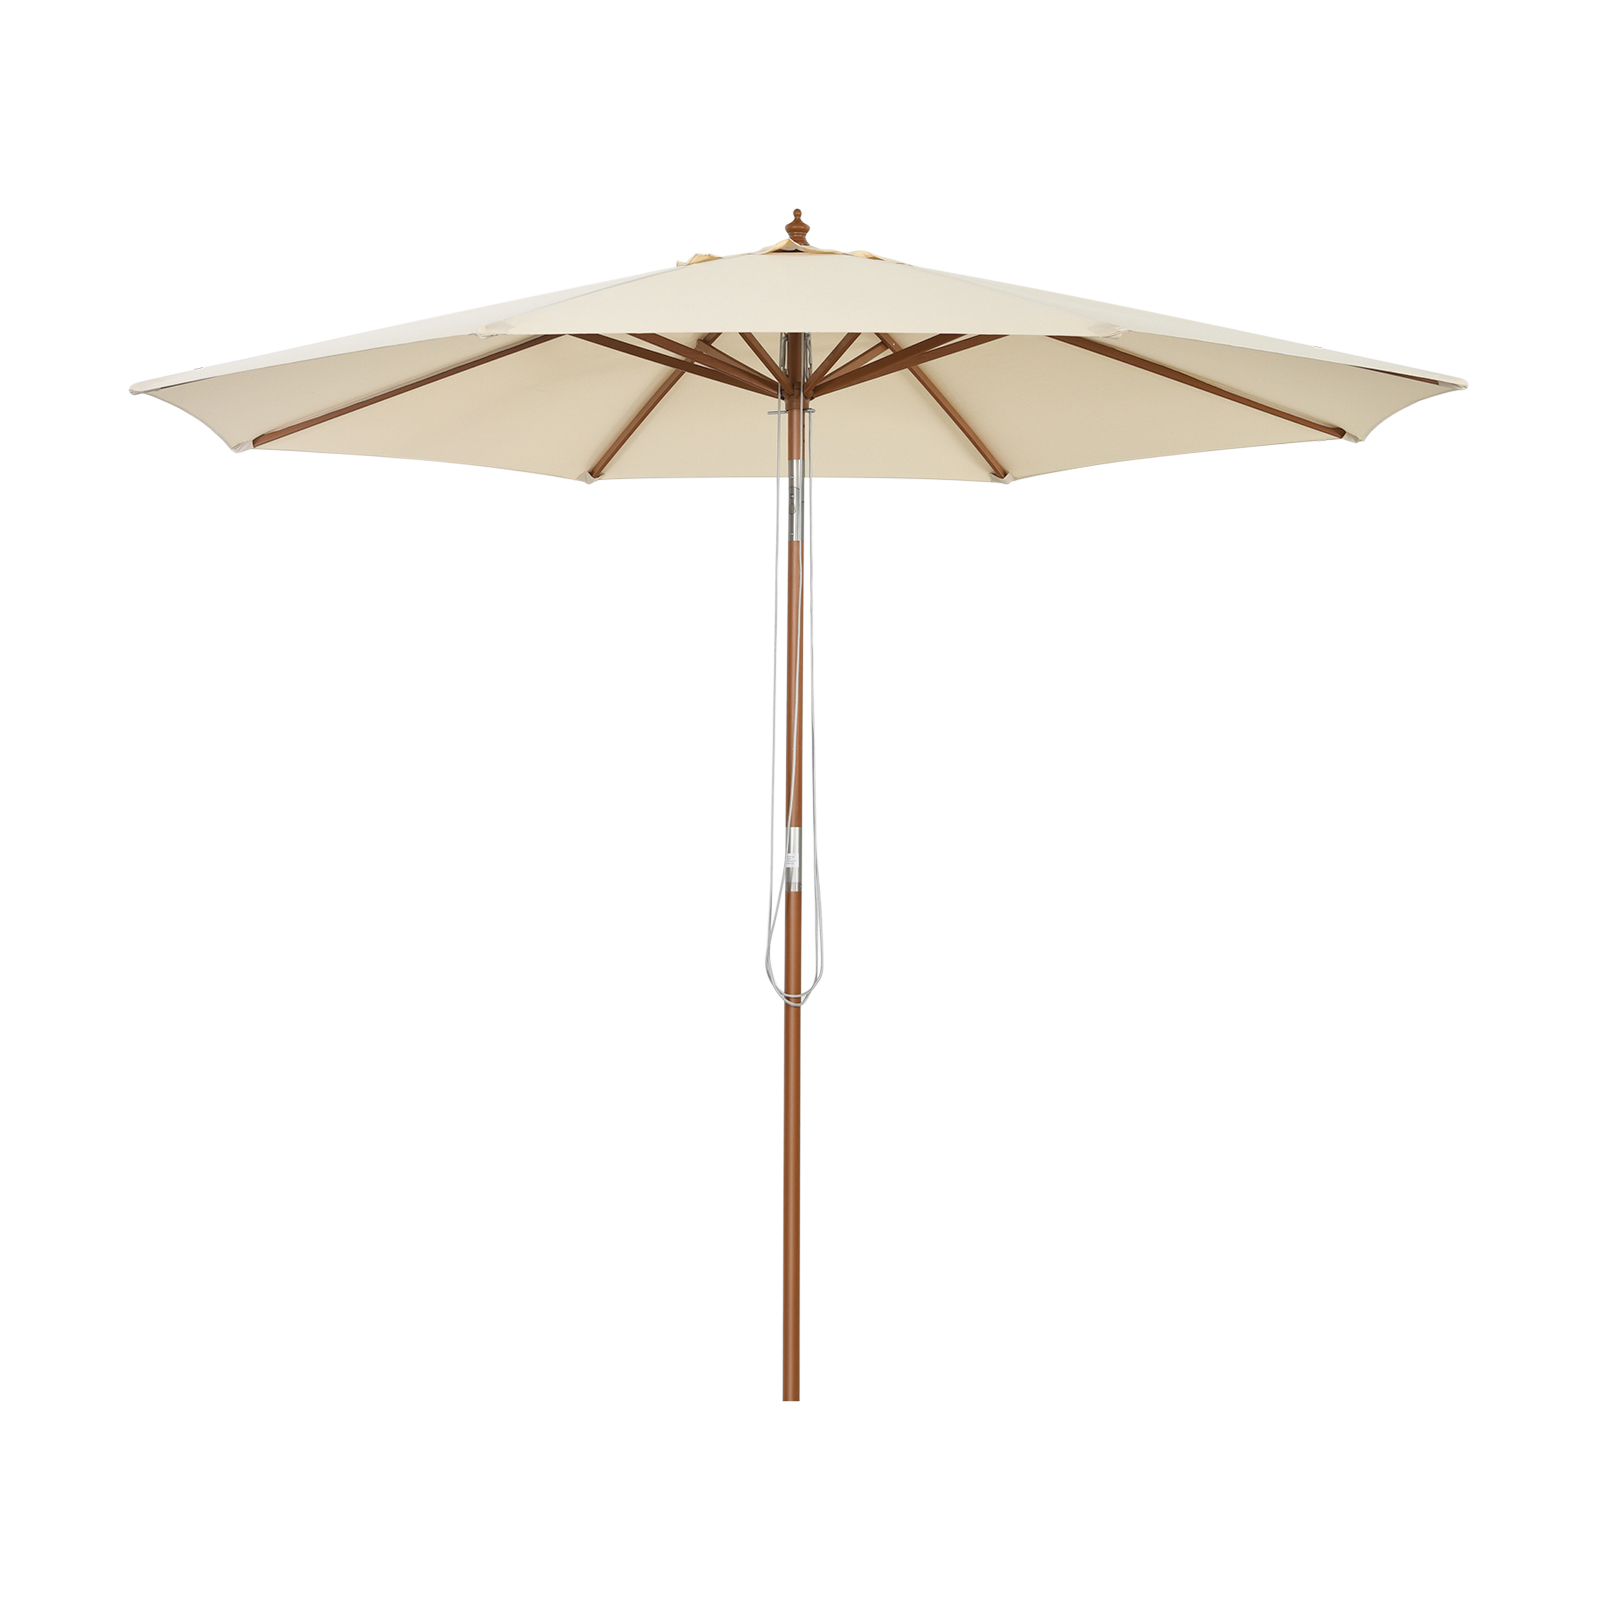 2.7/3m Wooden Patio Parasol Sun Shade Umbrella with 8 Ribs-3 m